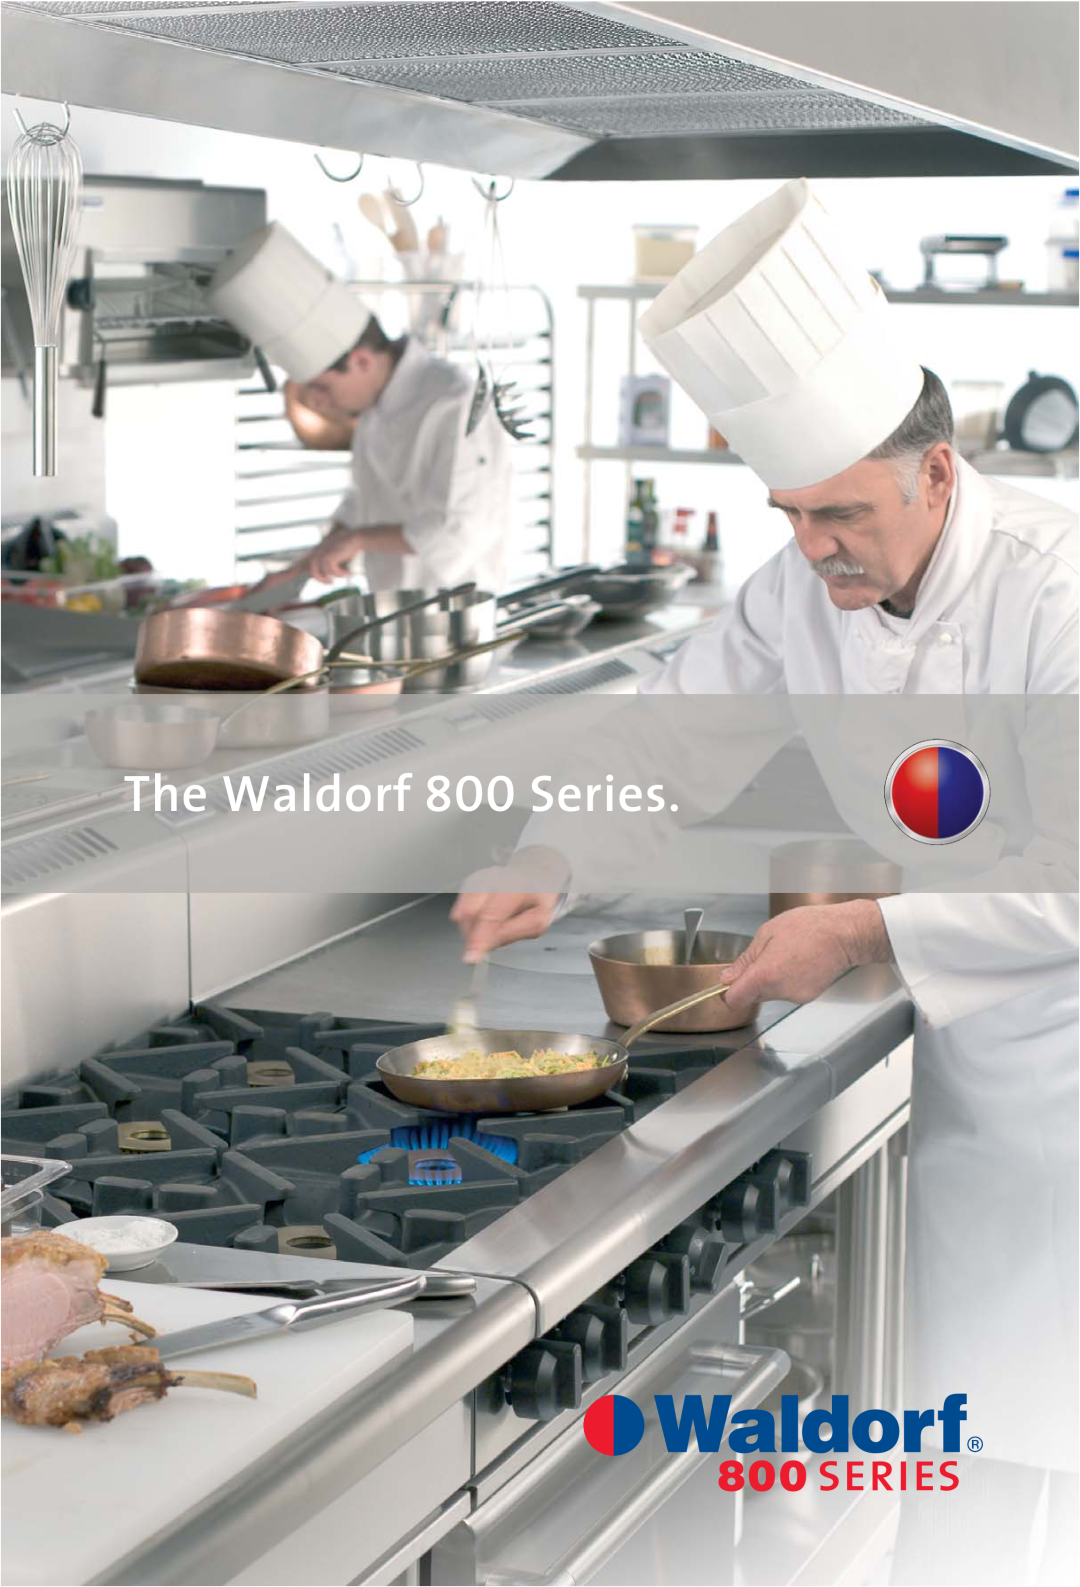 Moffat manual The Waldorf 800 Series 